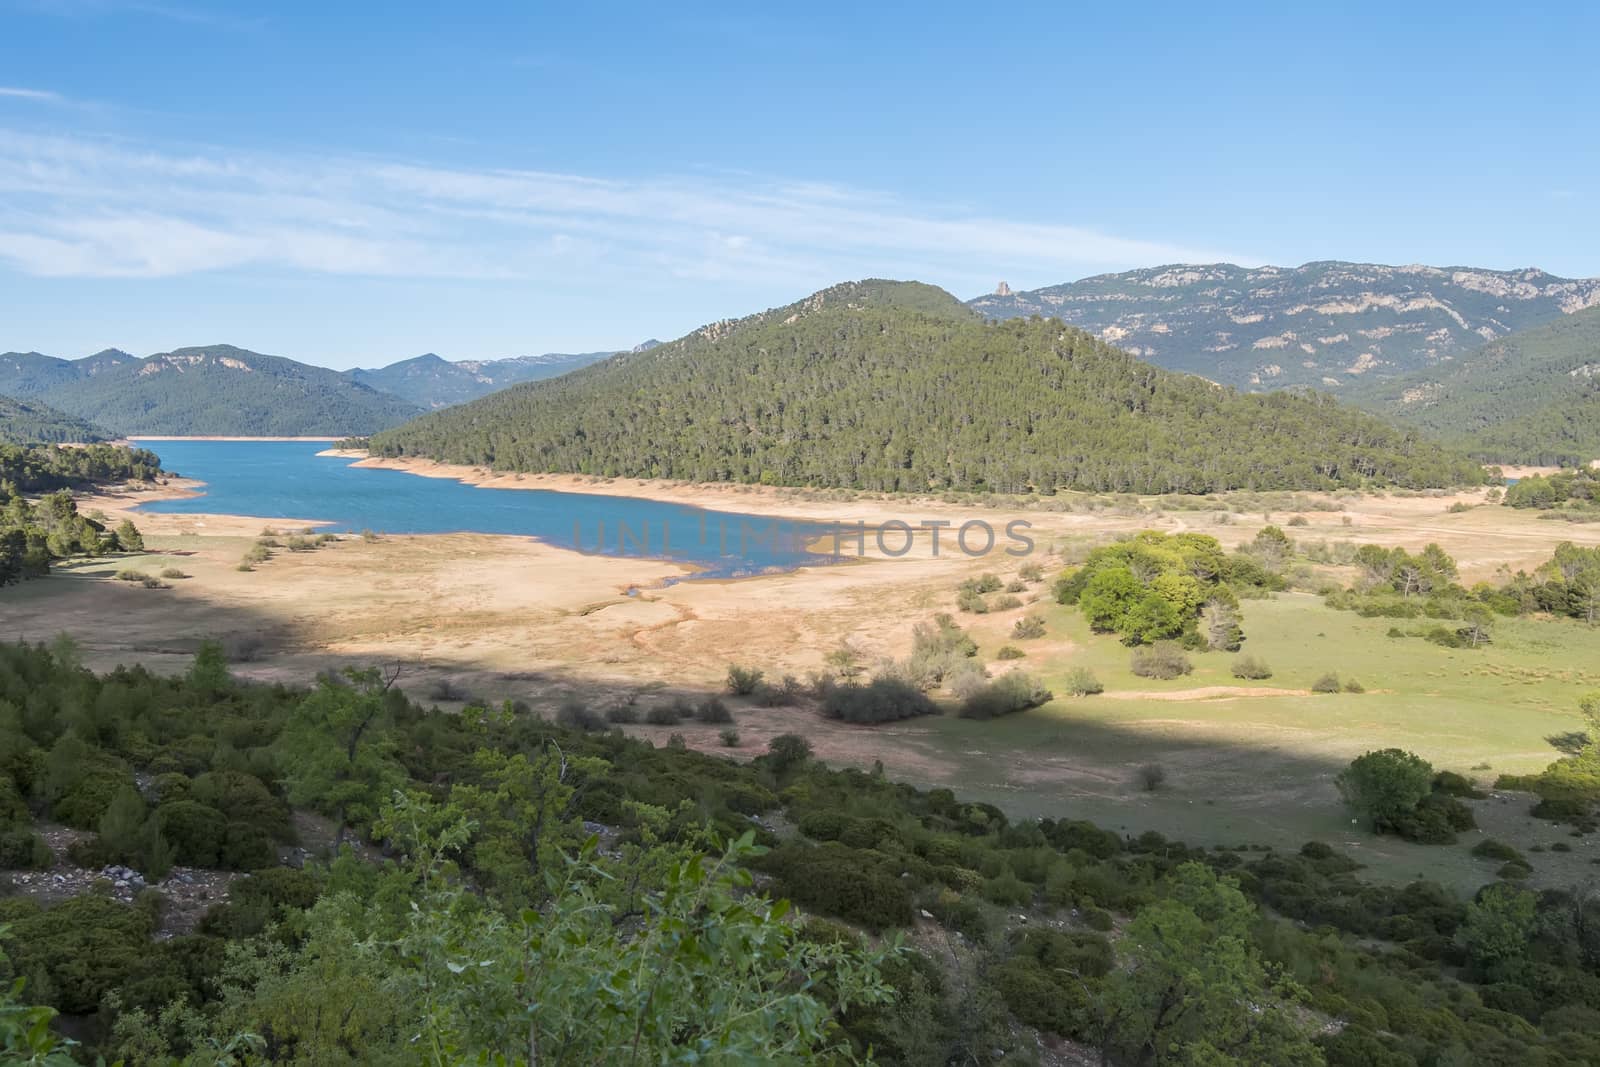 Rodriguez de la fuente lookout, Tranco reservoir, Cabeza de la v by max8xam